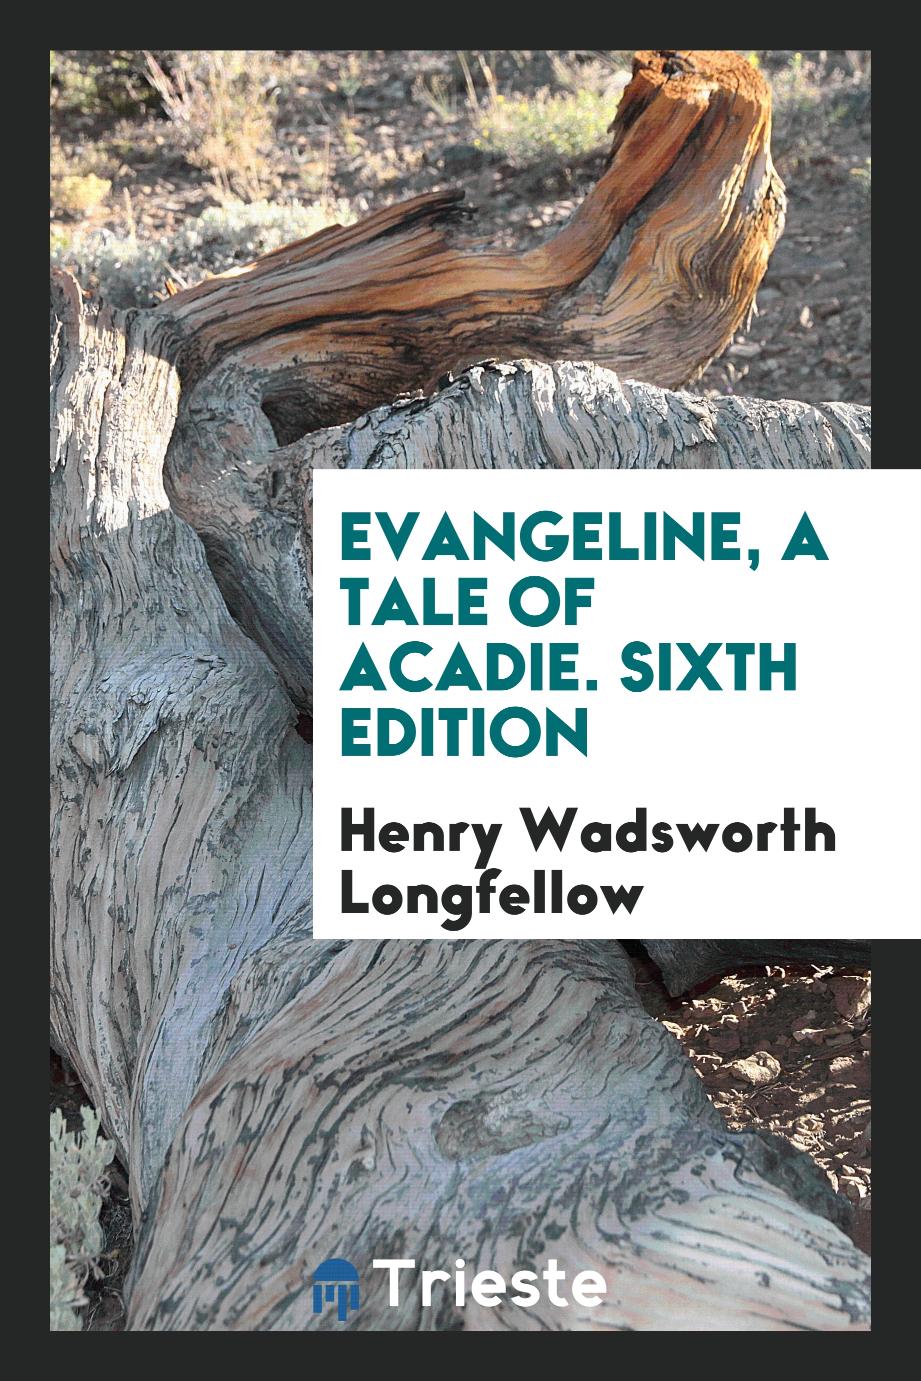 Evangeline, a Tale of Acadie. Sixth Edition